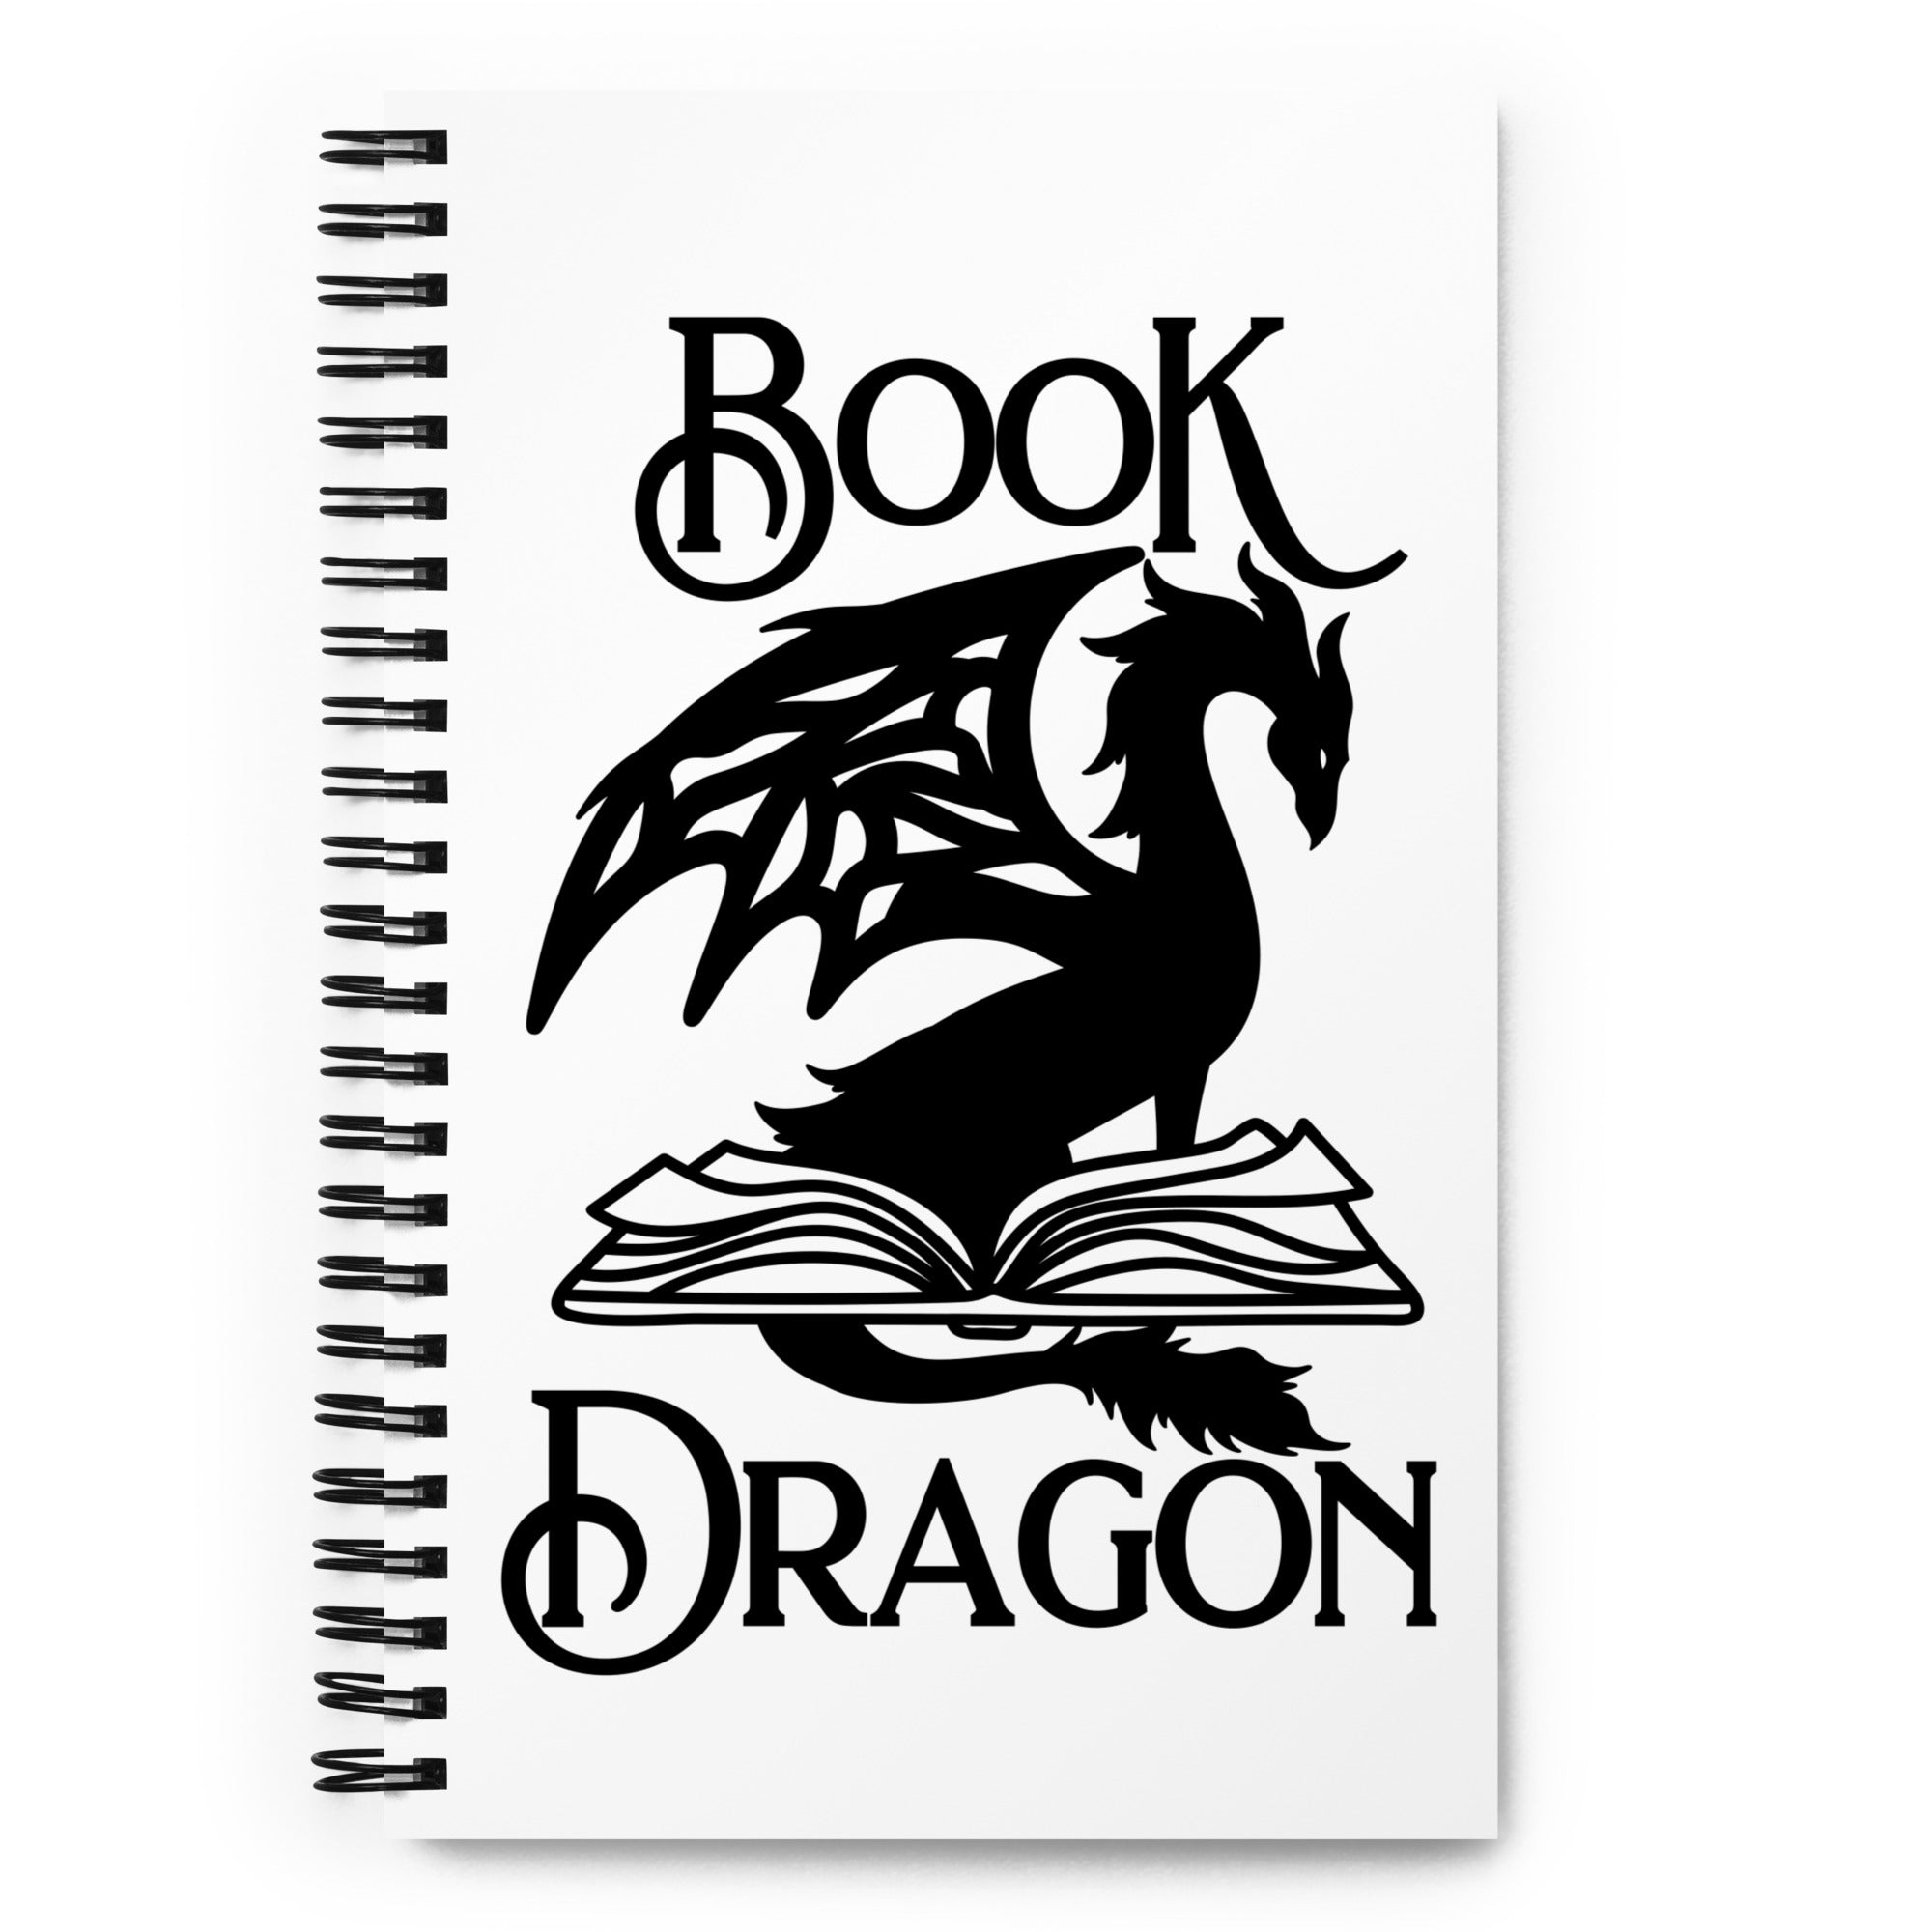 Book Dragon Spiral notebook for FireDrake Artistry